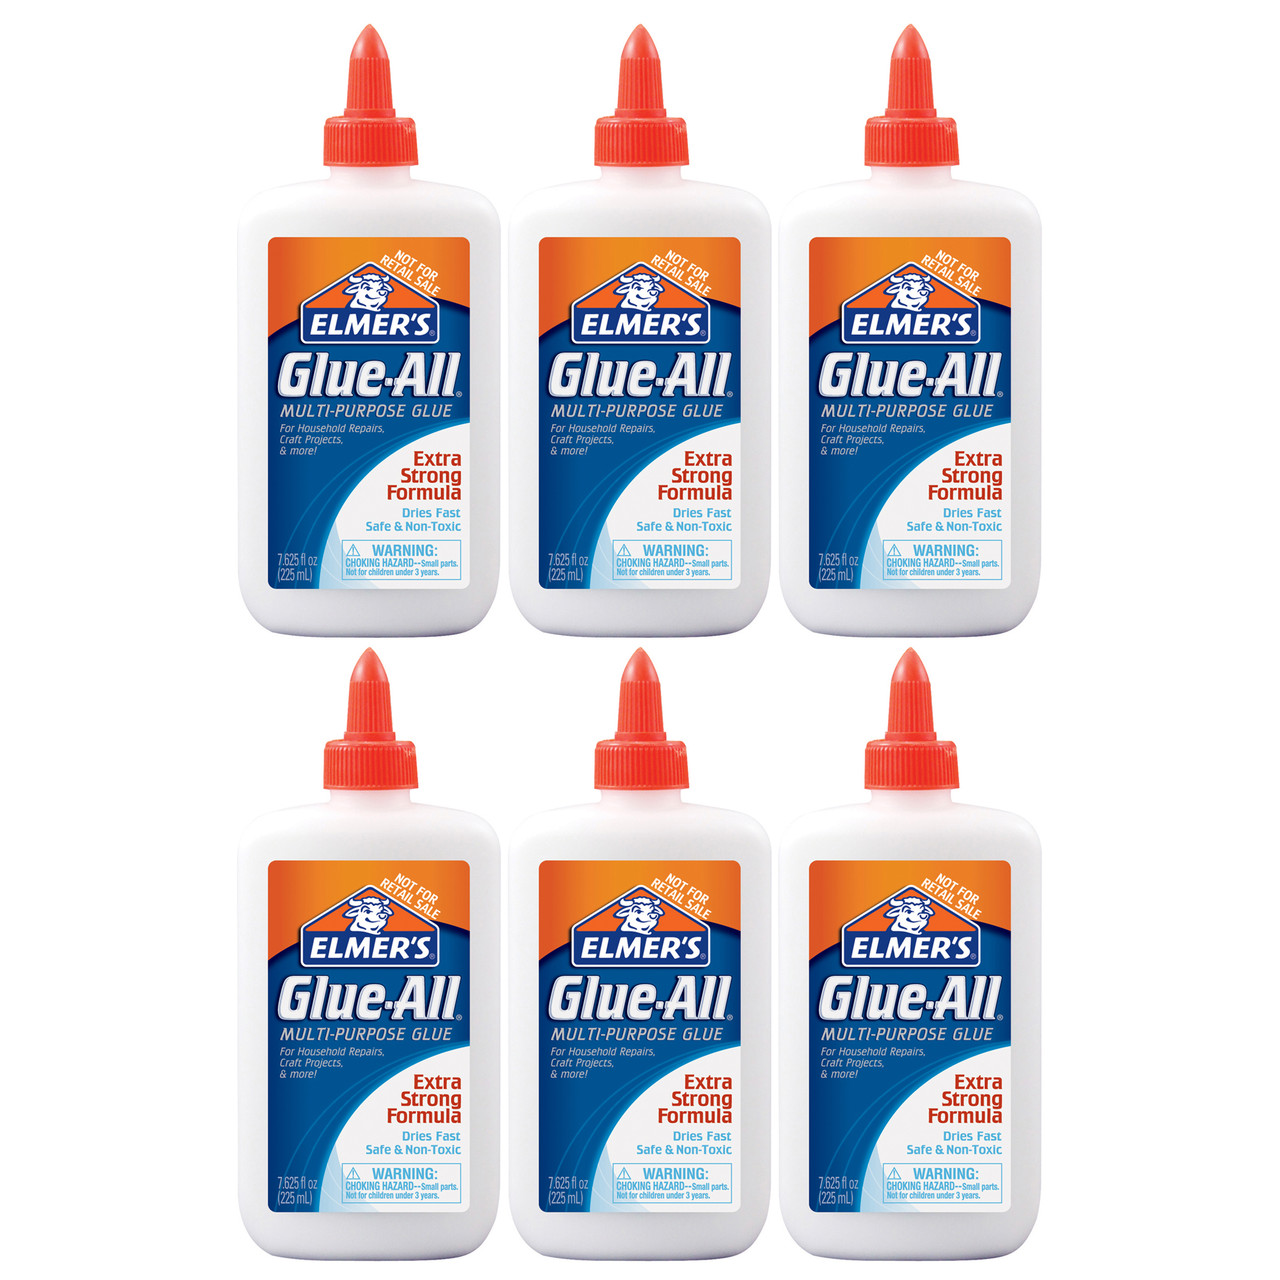 Elmer's Glue-All Multi-Purpose Liquid Glue, Extra Strong, 1 Gallon, 2 Count